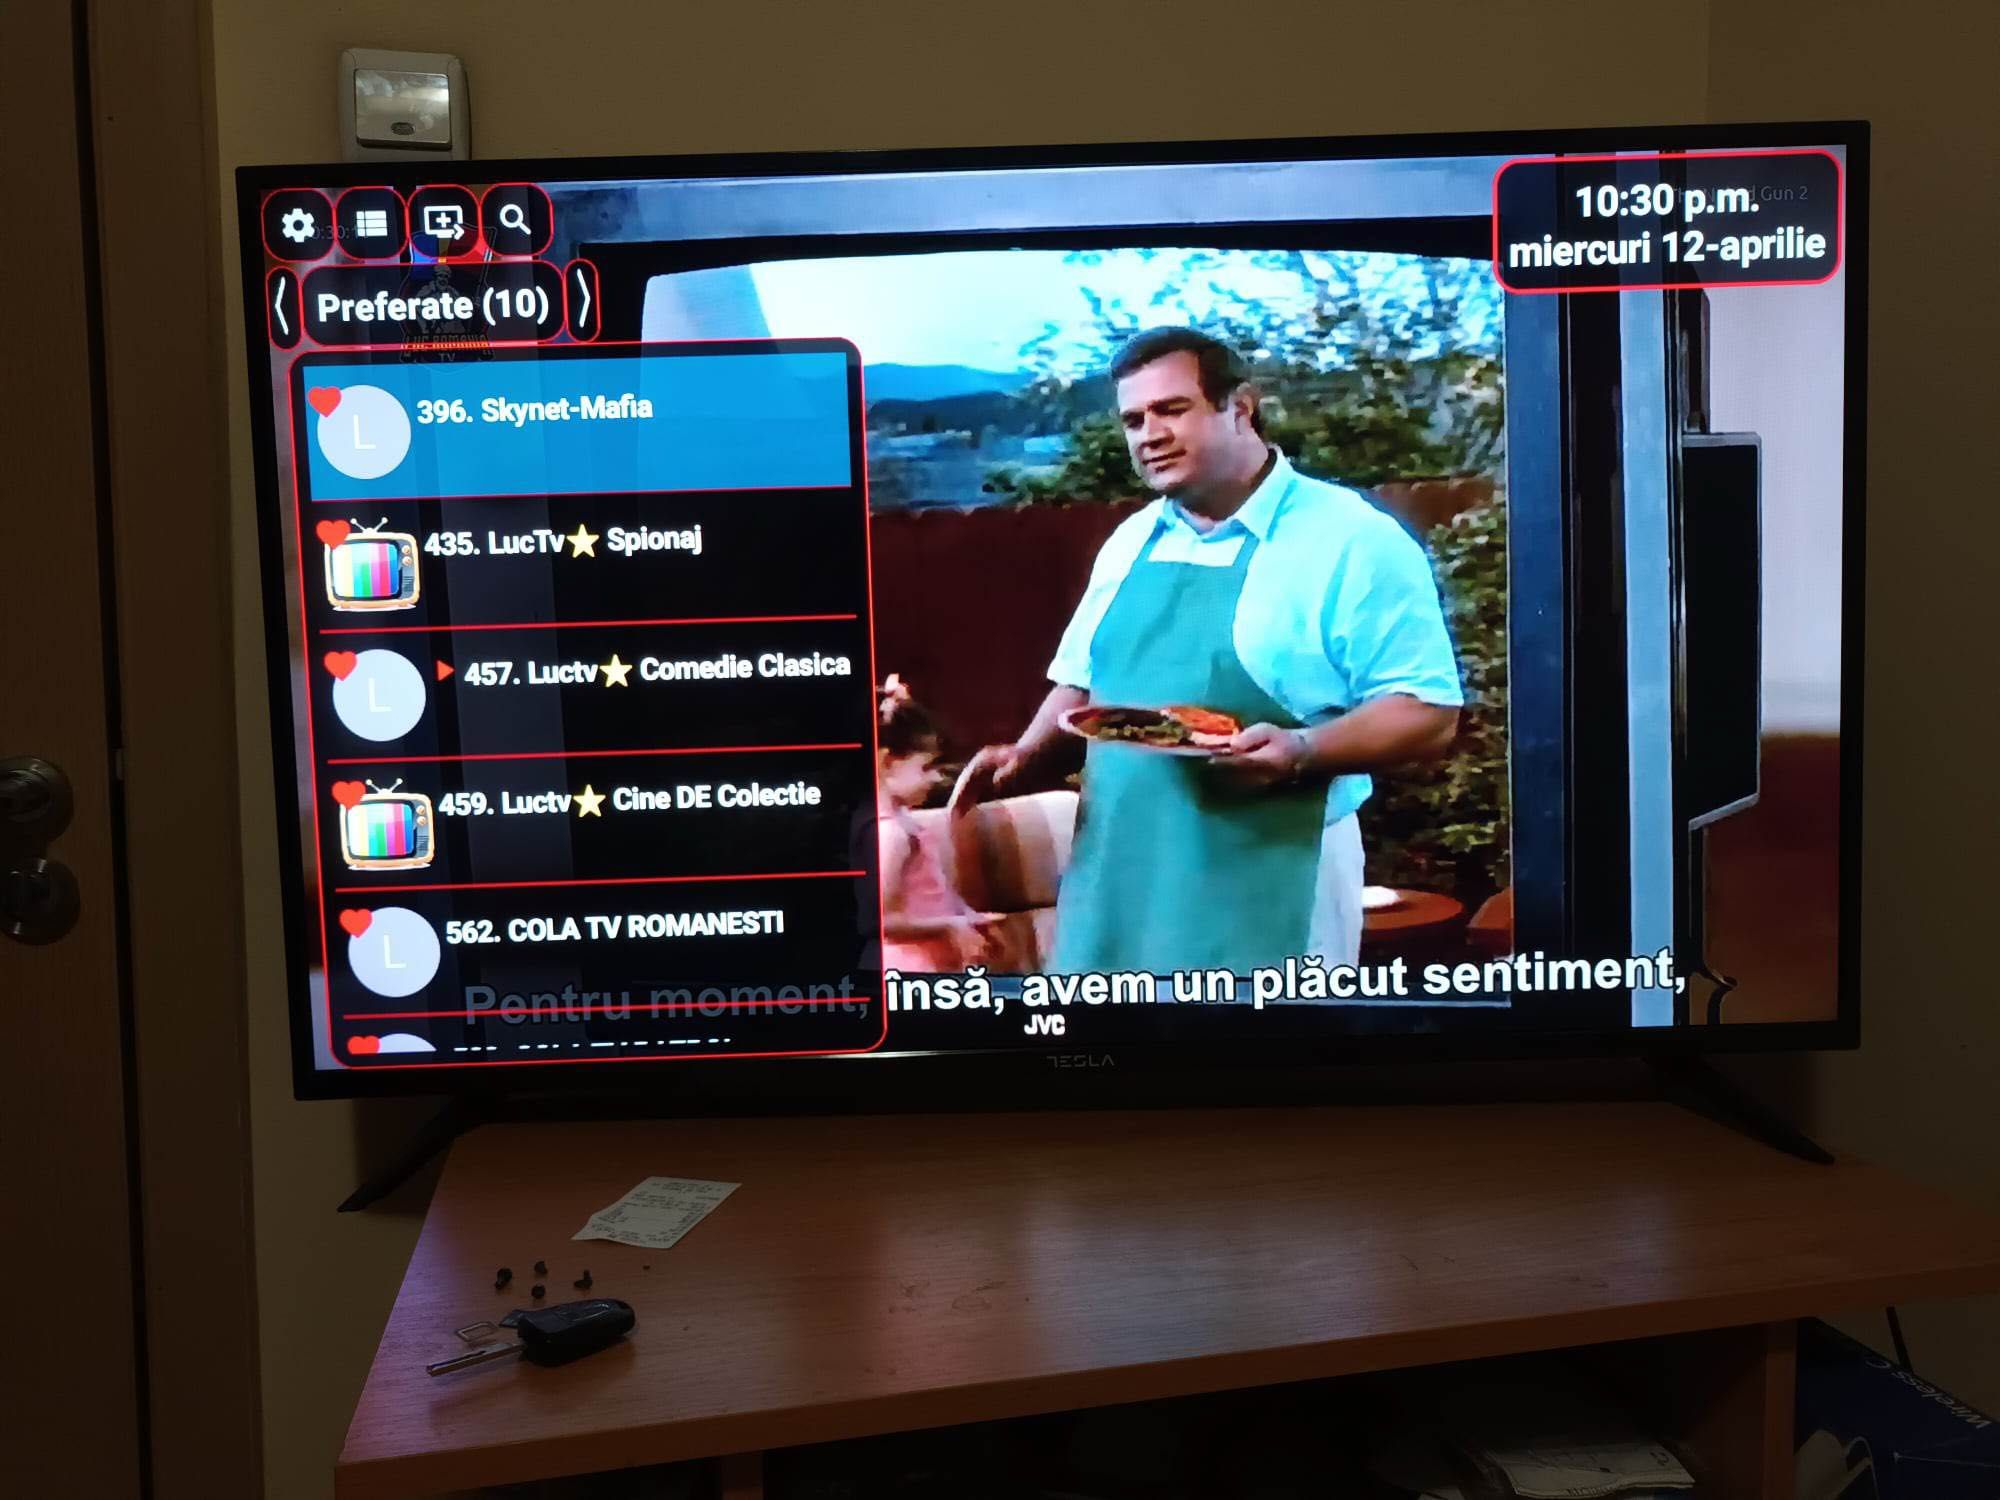 Tv Led,Smart tv,Android,110cm,Wifi,Hdmi,Chromcast